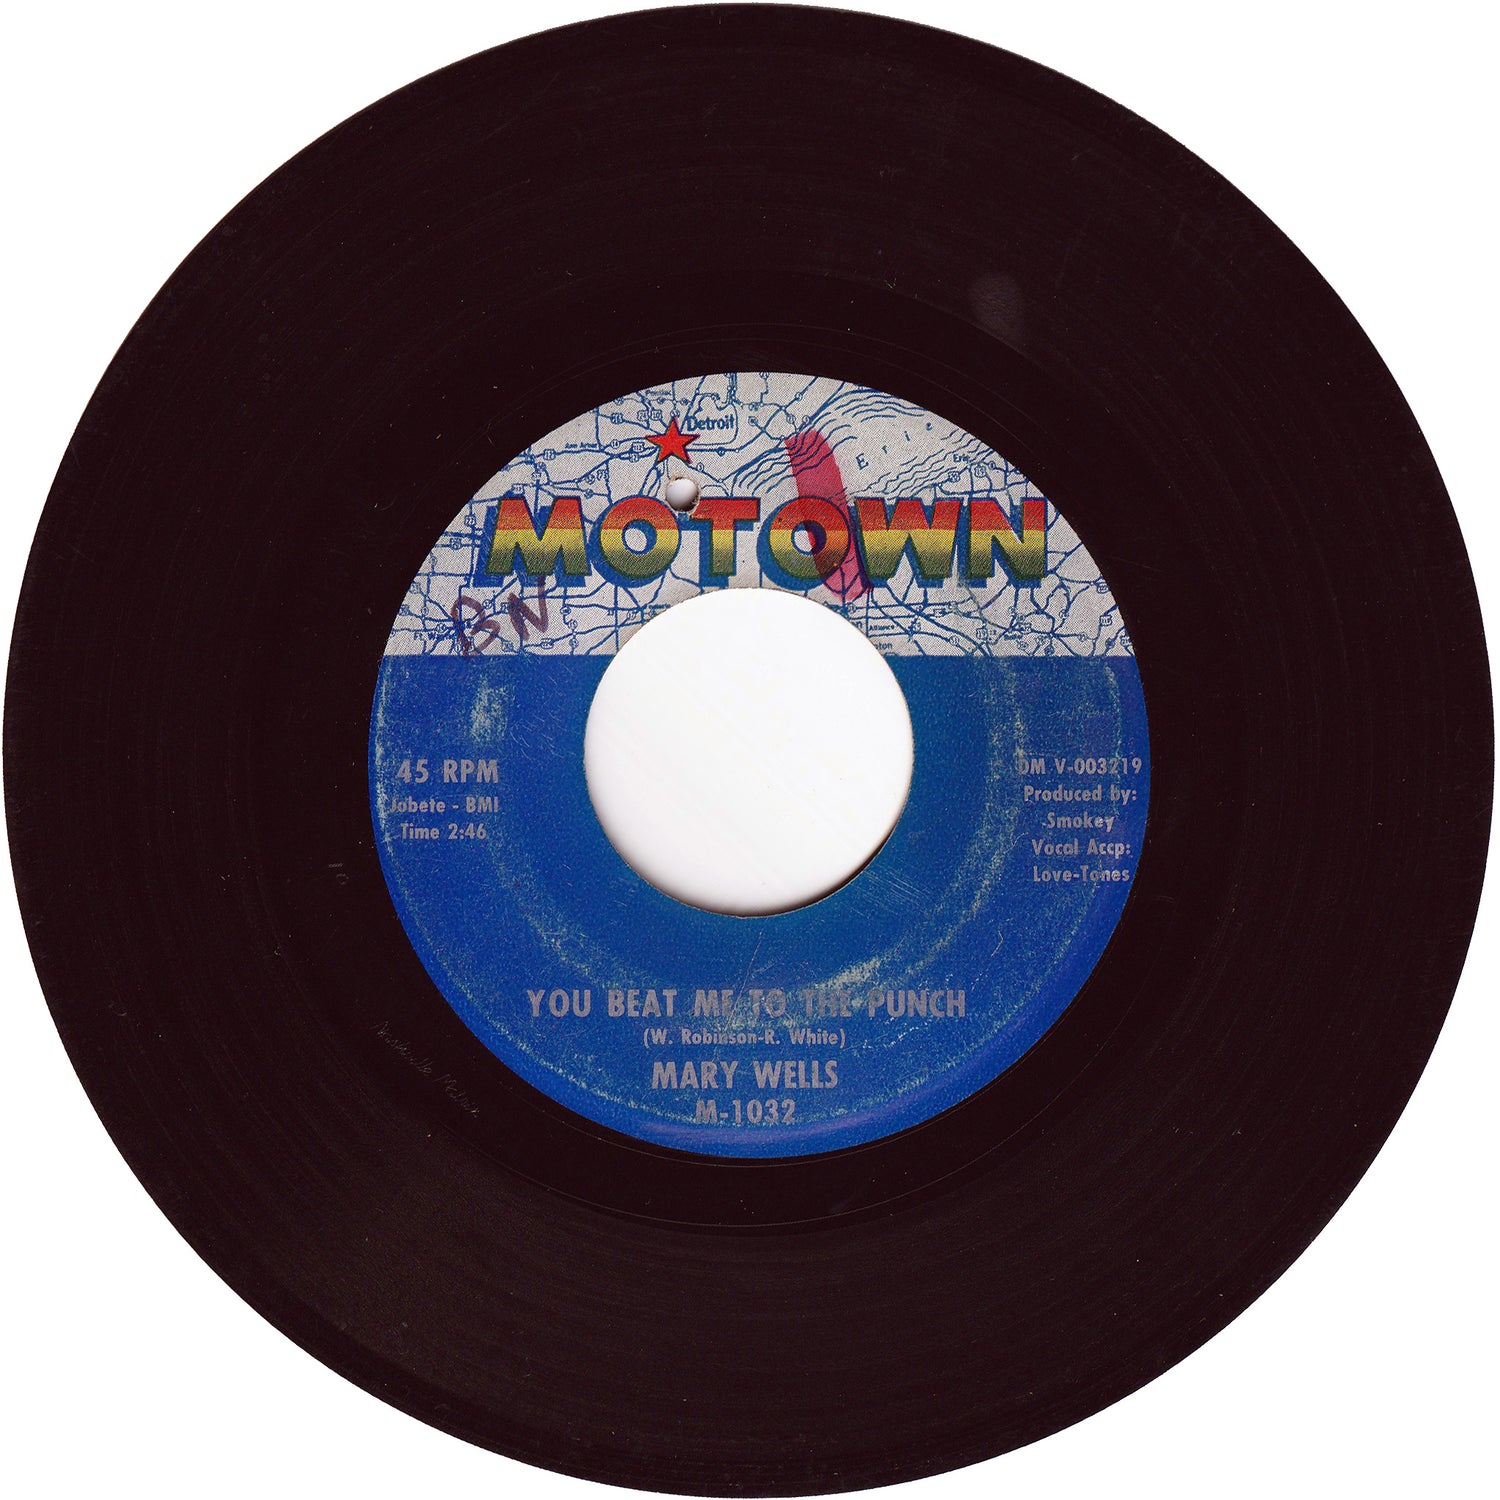 Motown, Detroit R&B